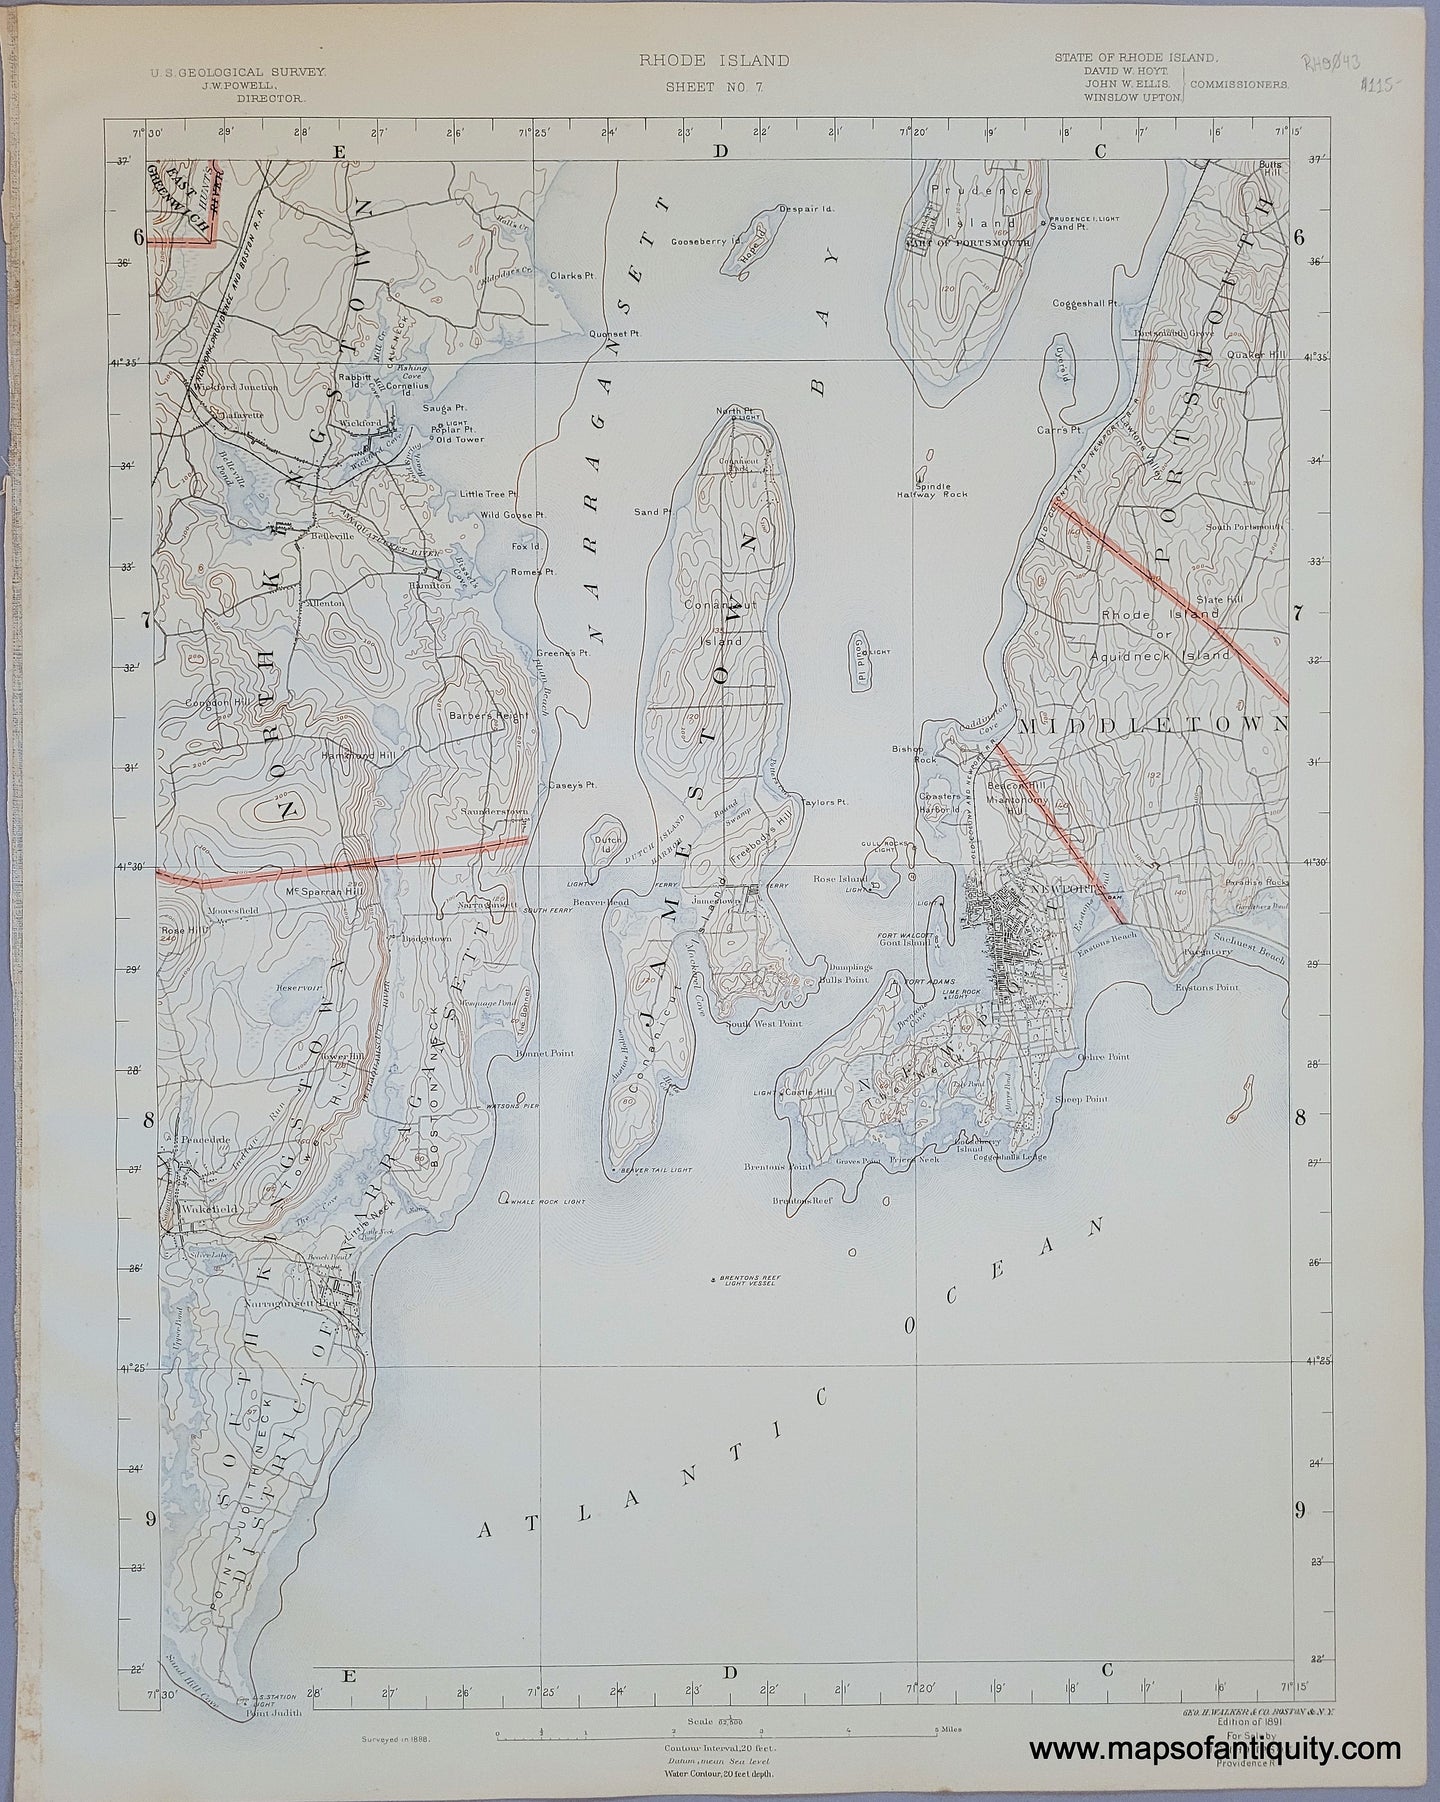 Antique-Topographical-Map-Rhode-Island-Sheet-No.-7-Newport-Jamestown-Rhode-Island--1888-USGS/U.S.-Geological-Survey-Maps-Of-Antiquity